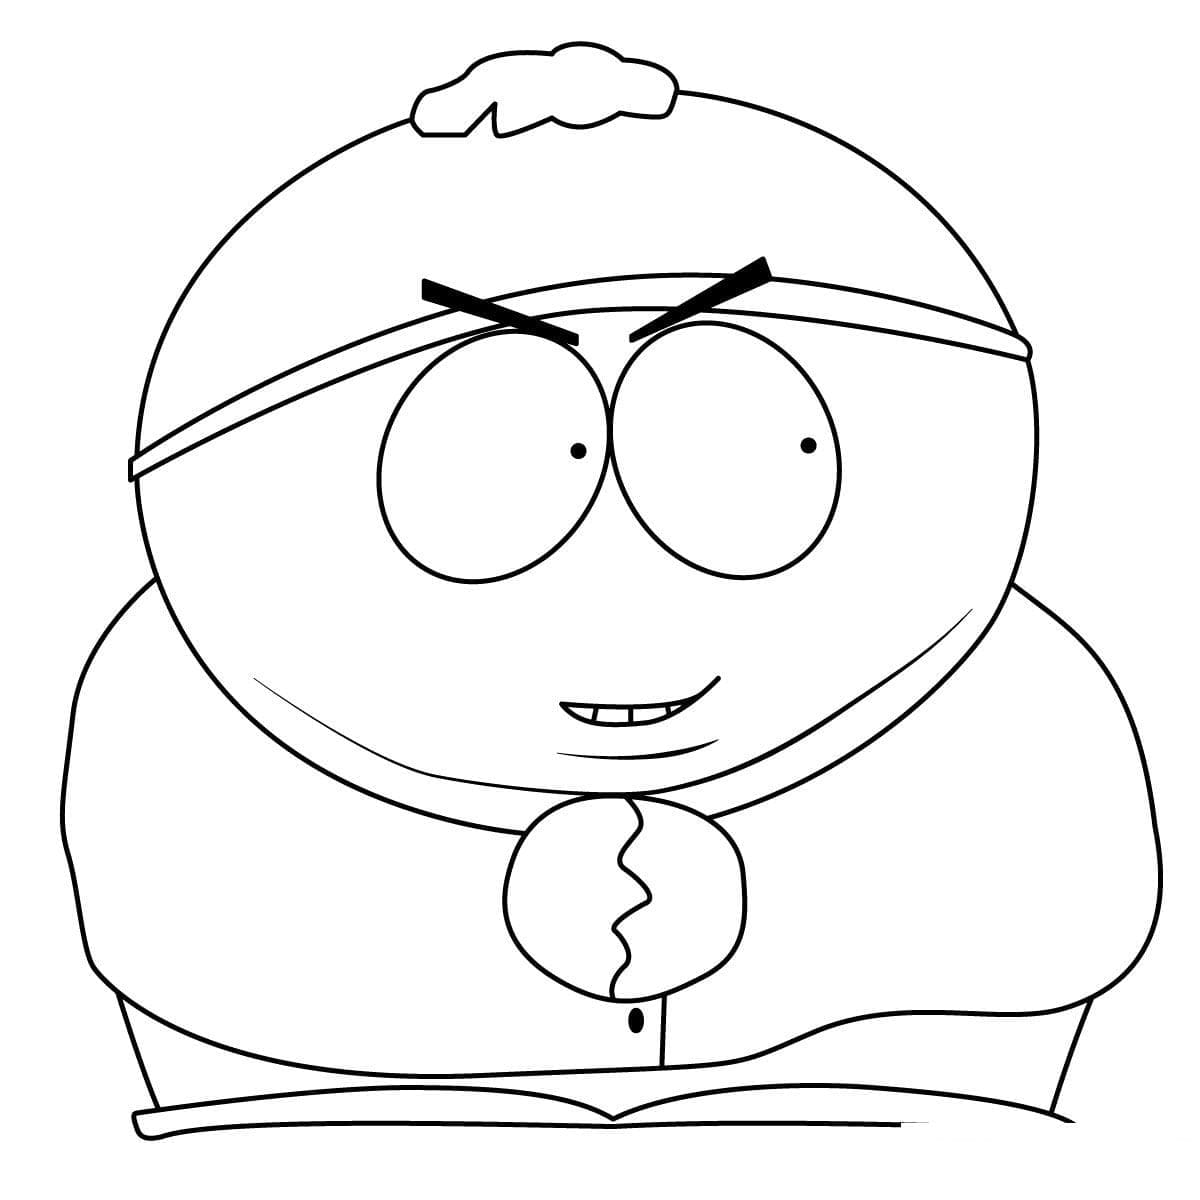 Målarbild Eric Cartman från South Park